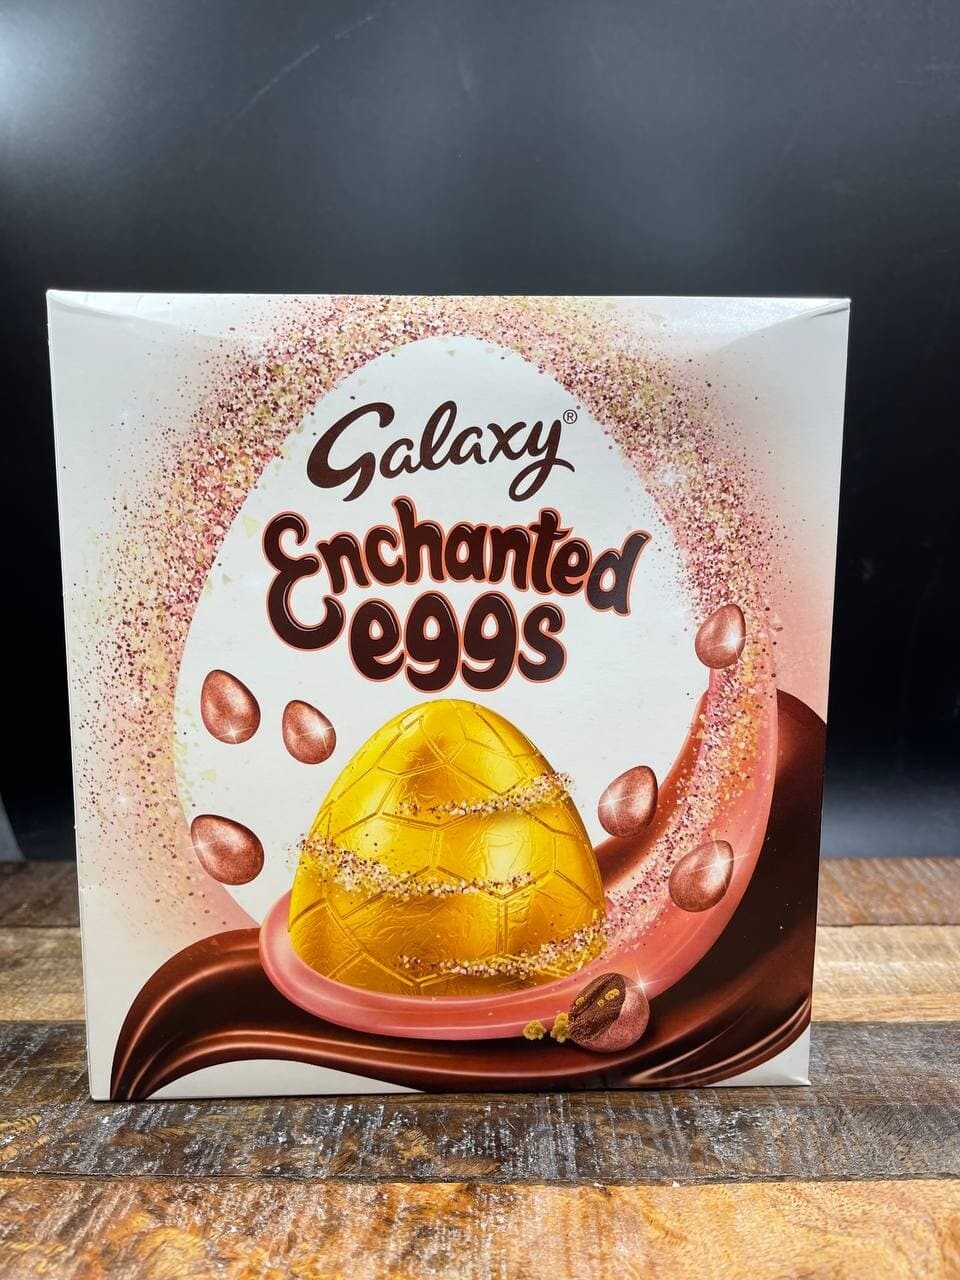 Galaxy Enchanted Eggs Easter Egg 206g